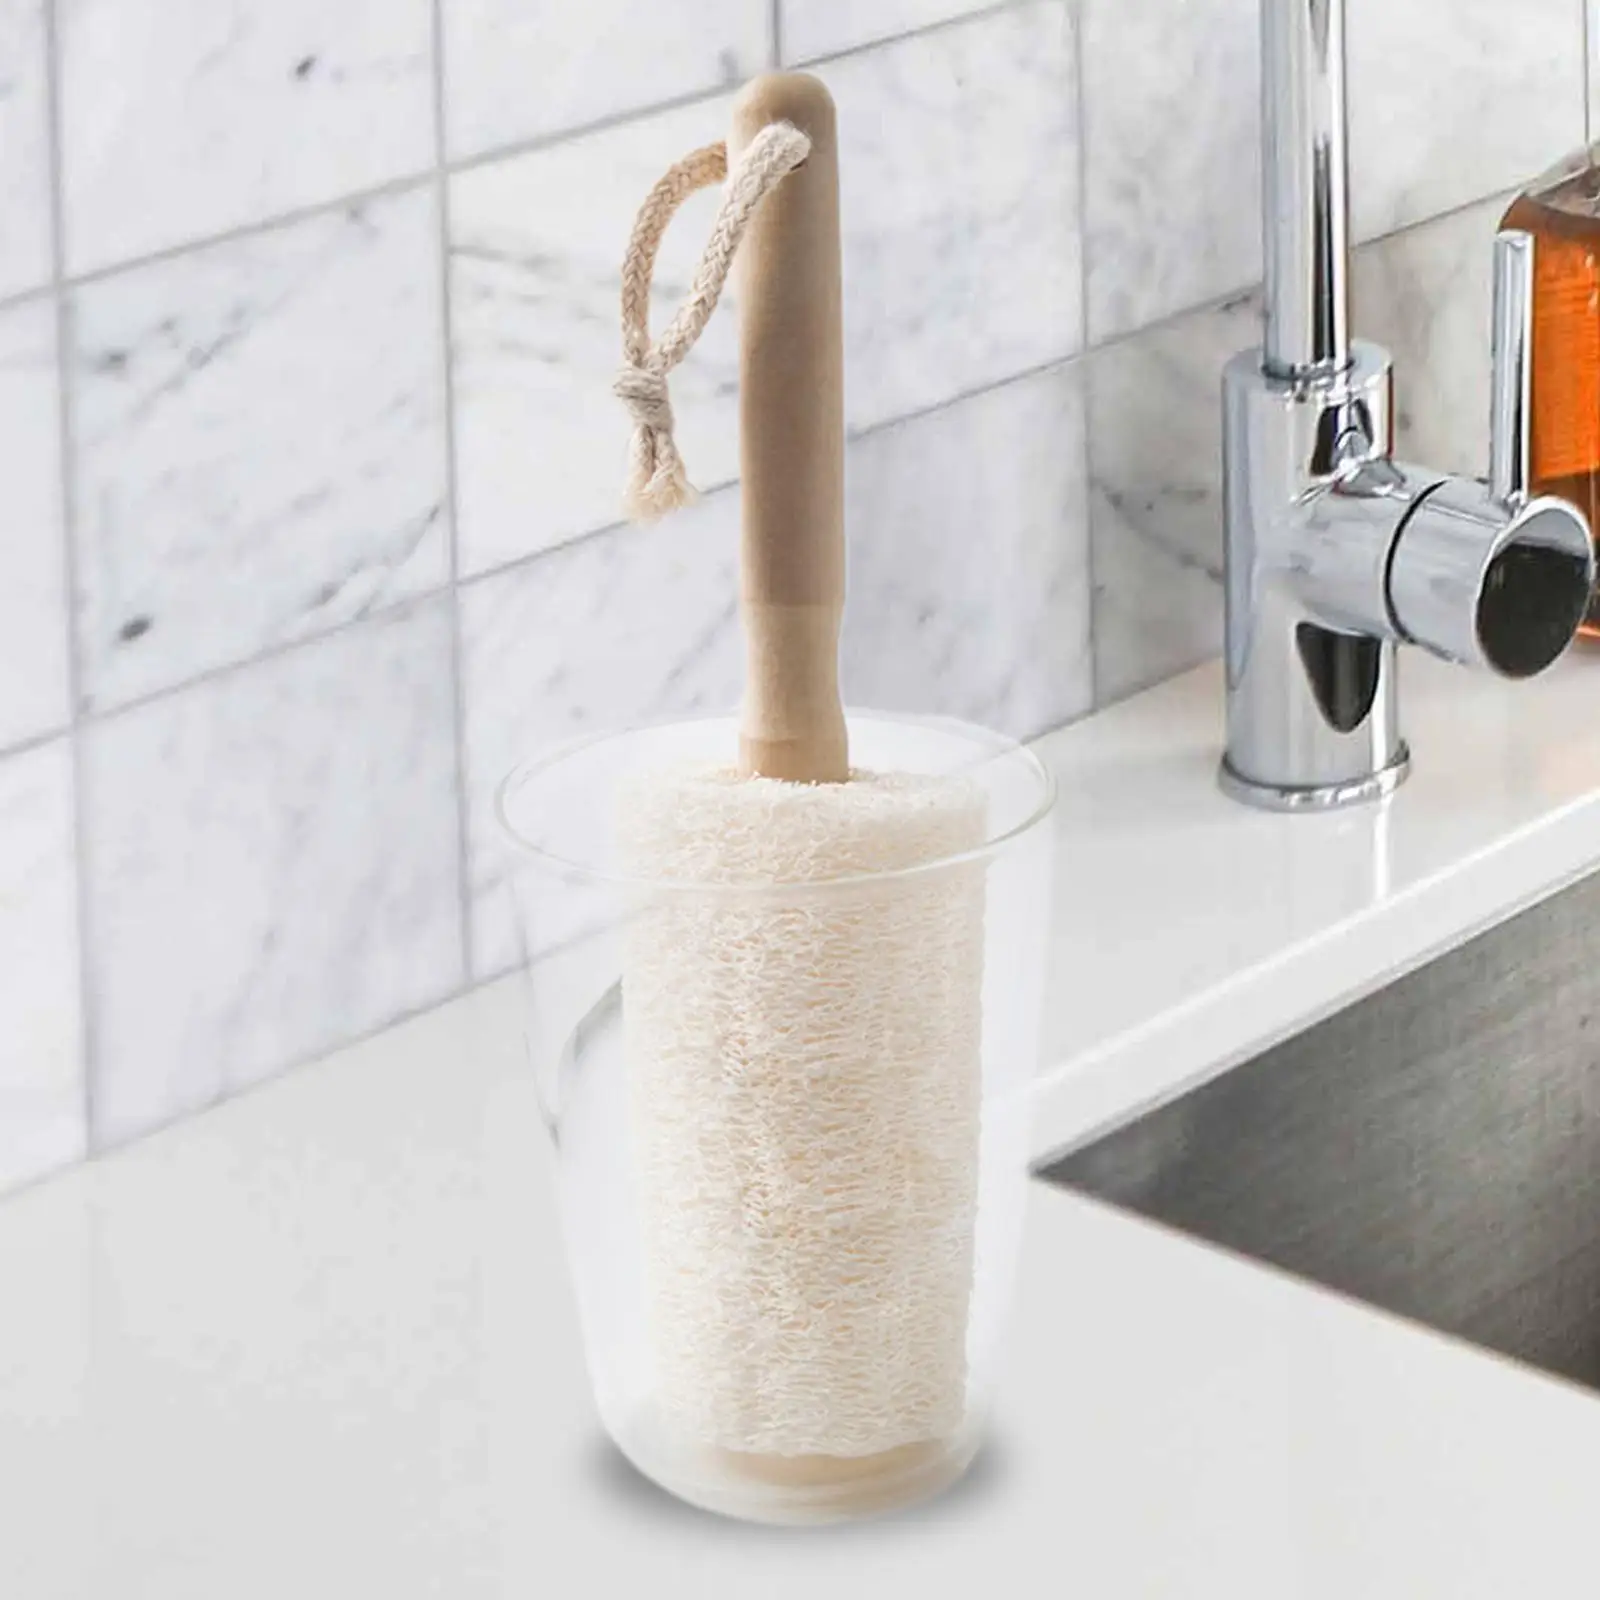 Bottle Cleaning Brush Household Cleaning Brush Scrubber Portable for Mugs